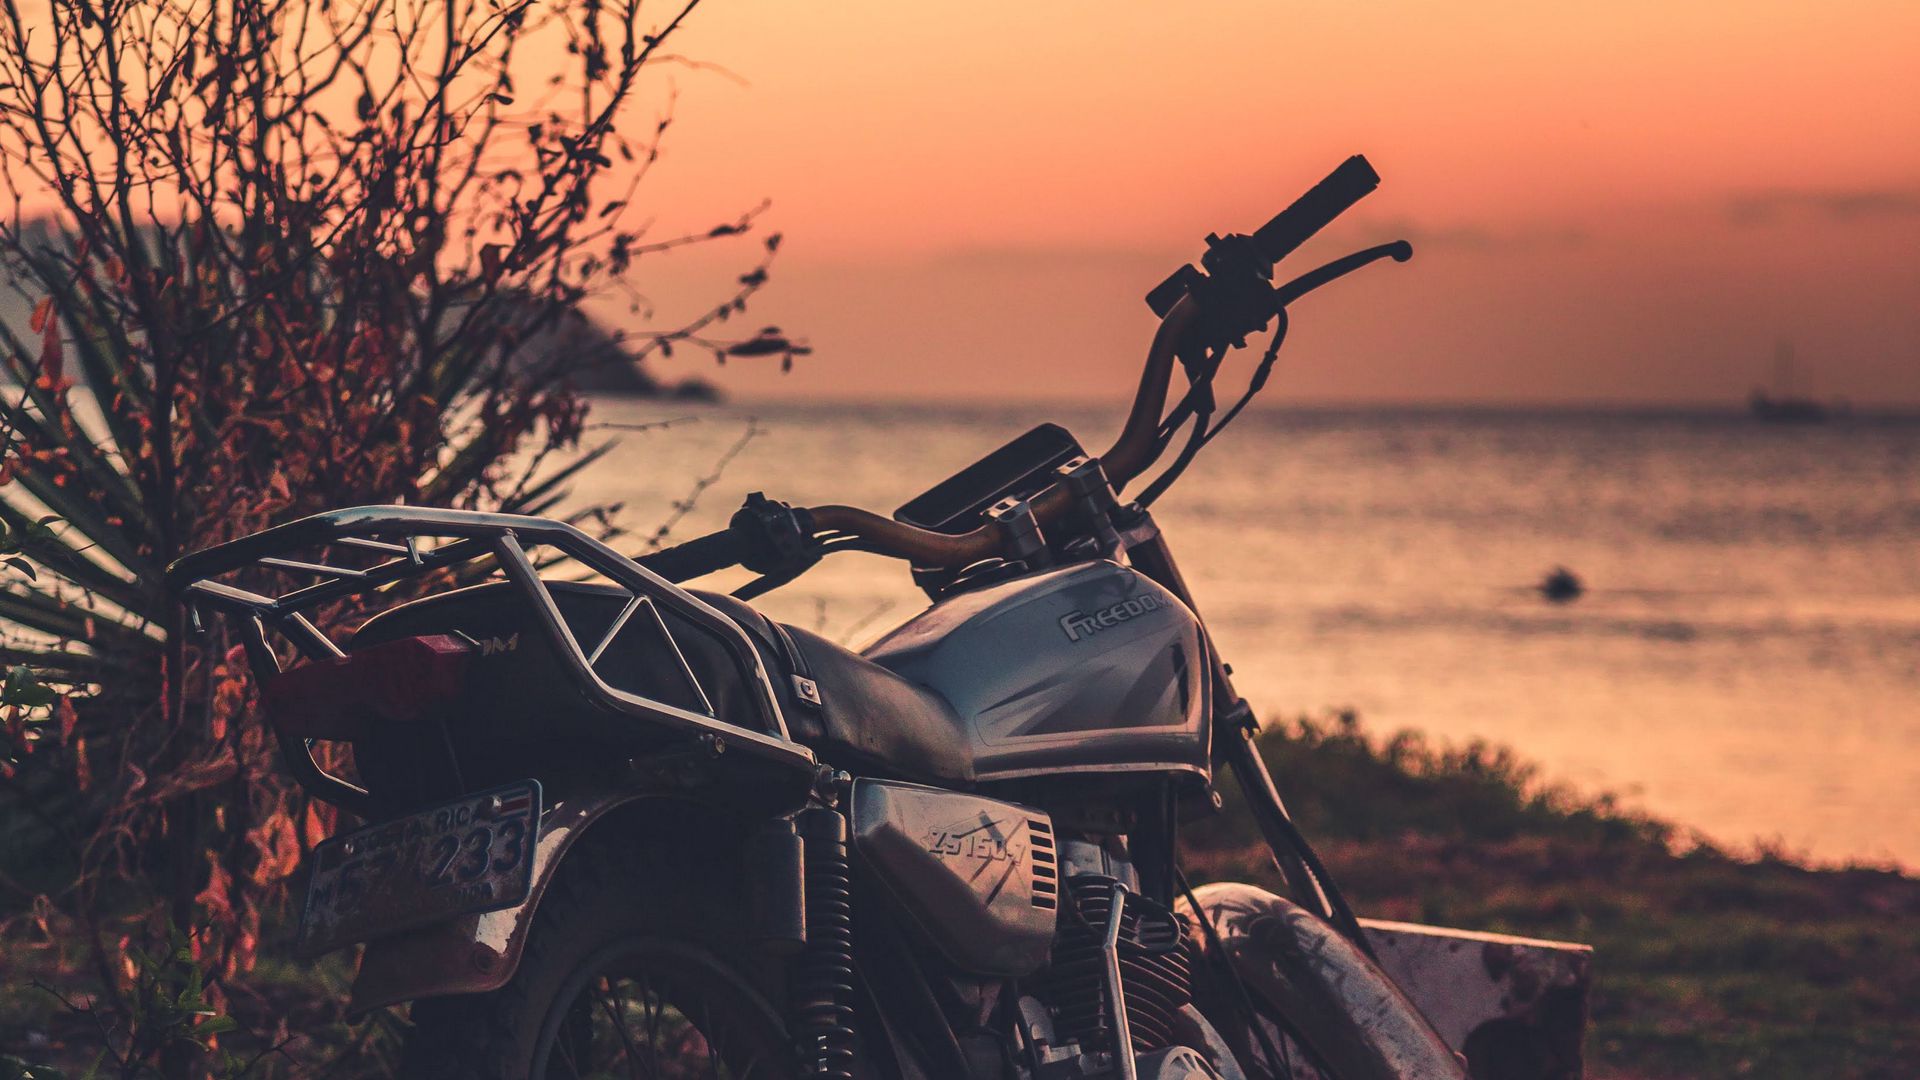 Download wallpaper 1920x1080 motorcycle, motor, rear view, sunset full ...